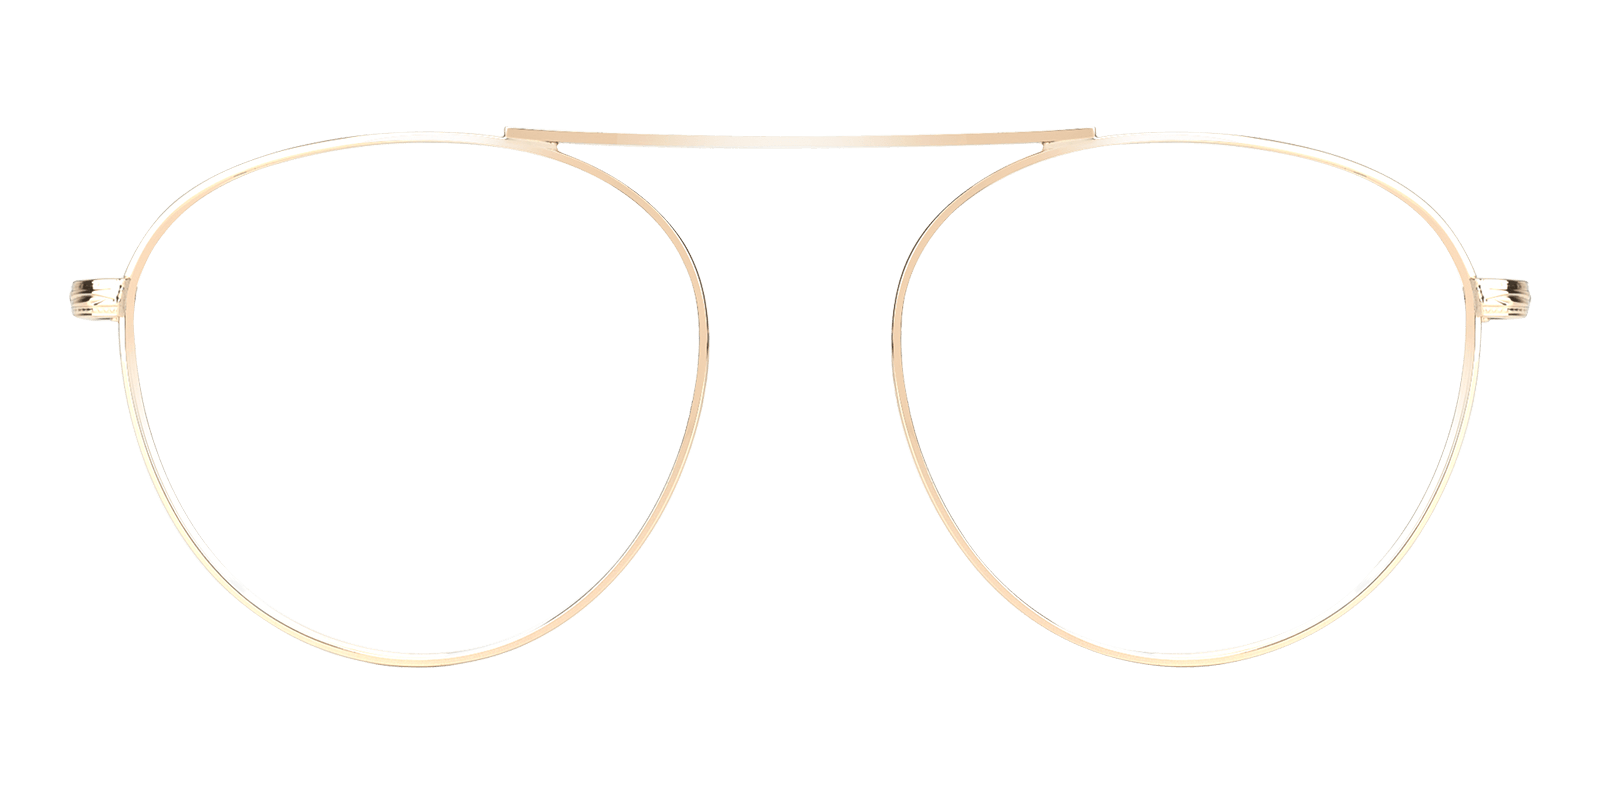 Fleybean Aviator Eyeglasses in Black - Sllac